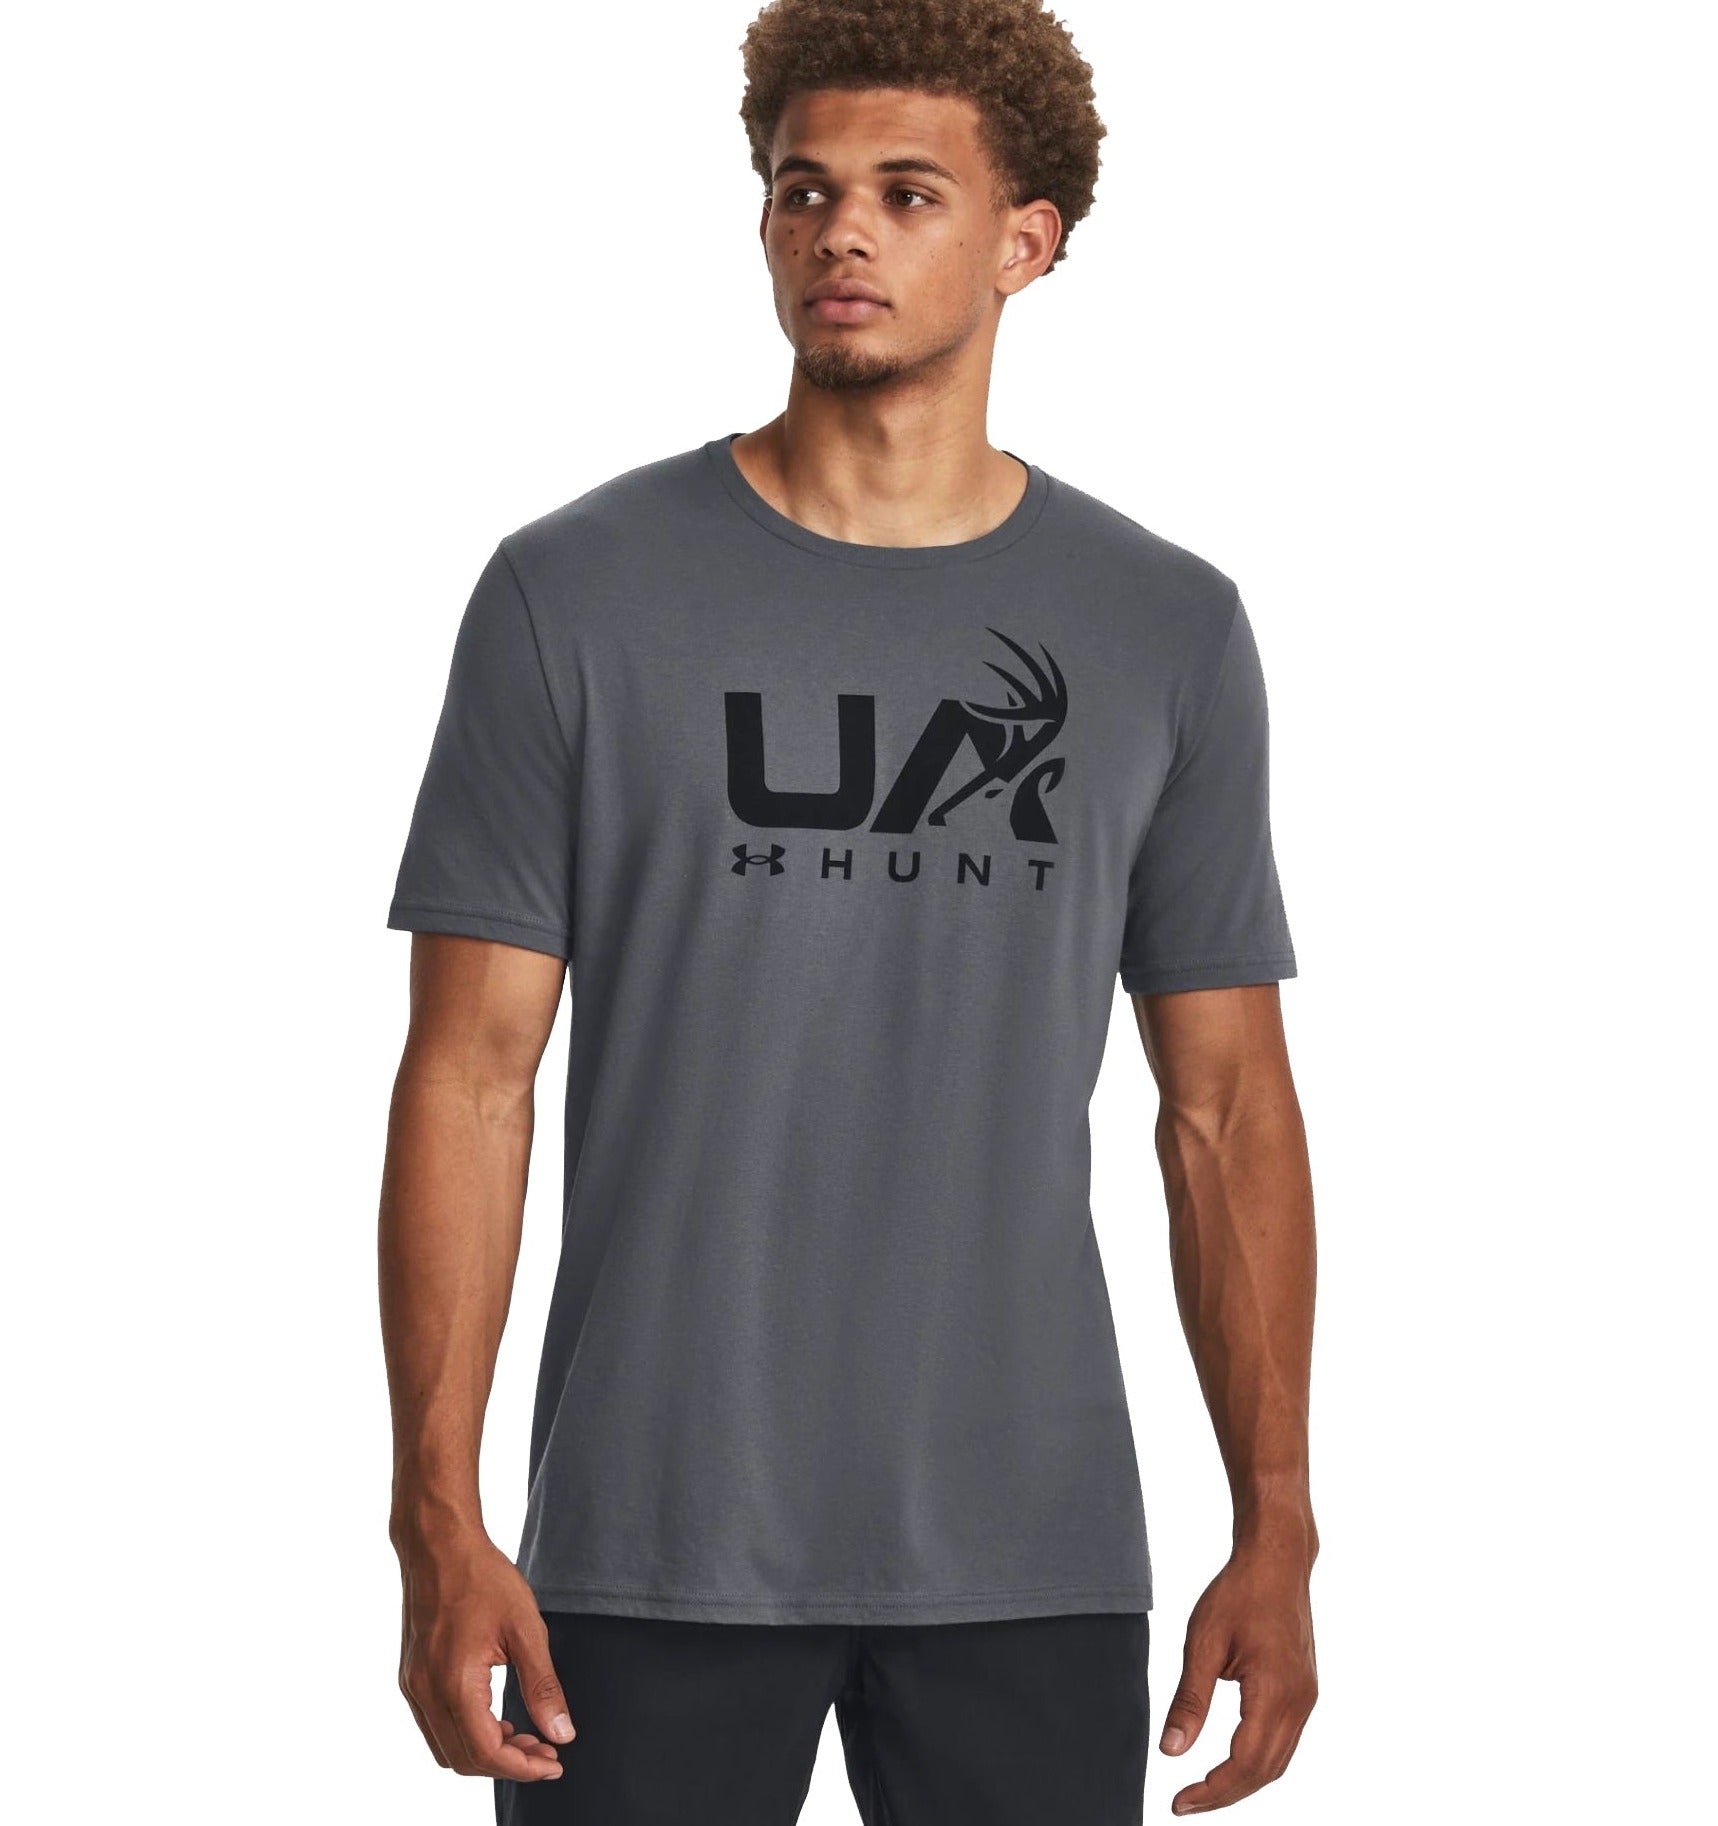 Under Armour Men's Antler Hunt Logo T Shirt